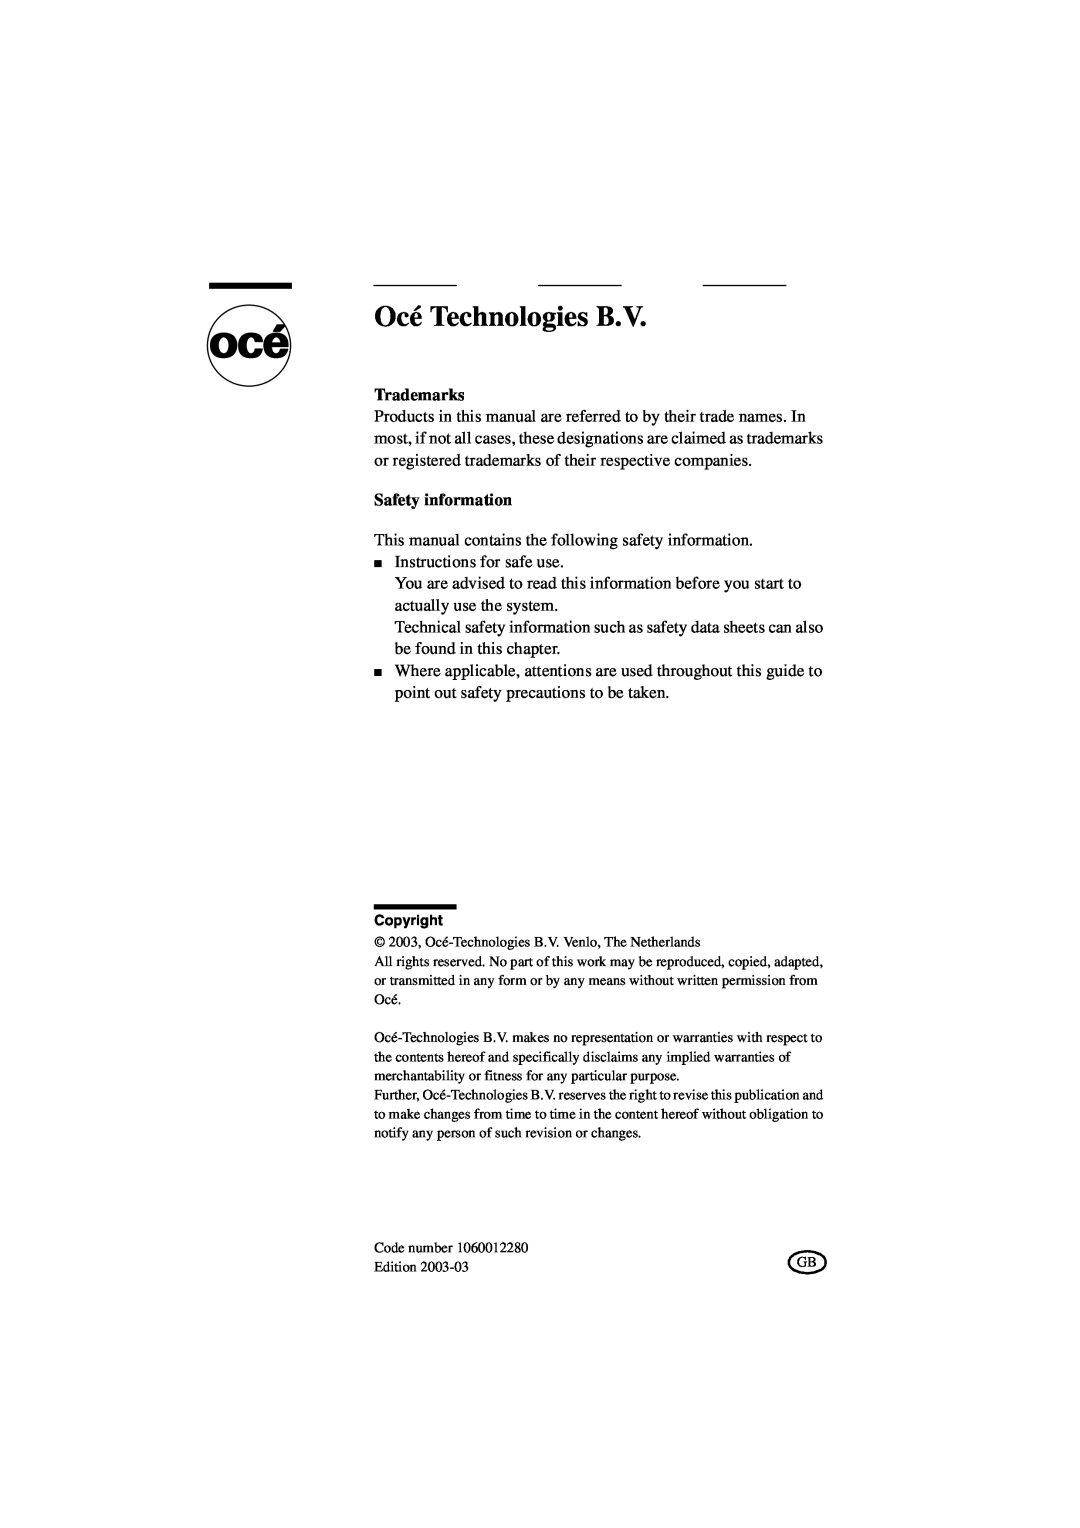 Oce North America TCS400 manual Trademarks, Safety information, Océ Technologies B.V 